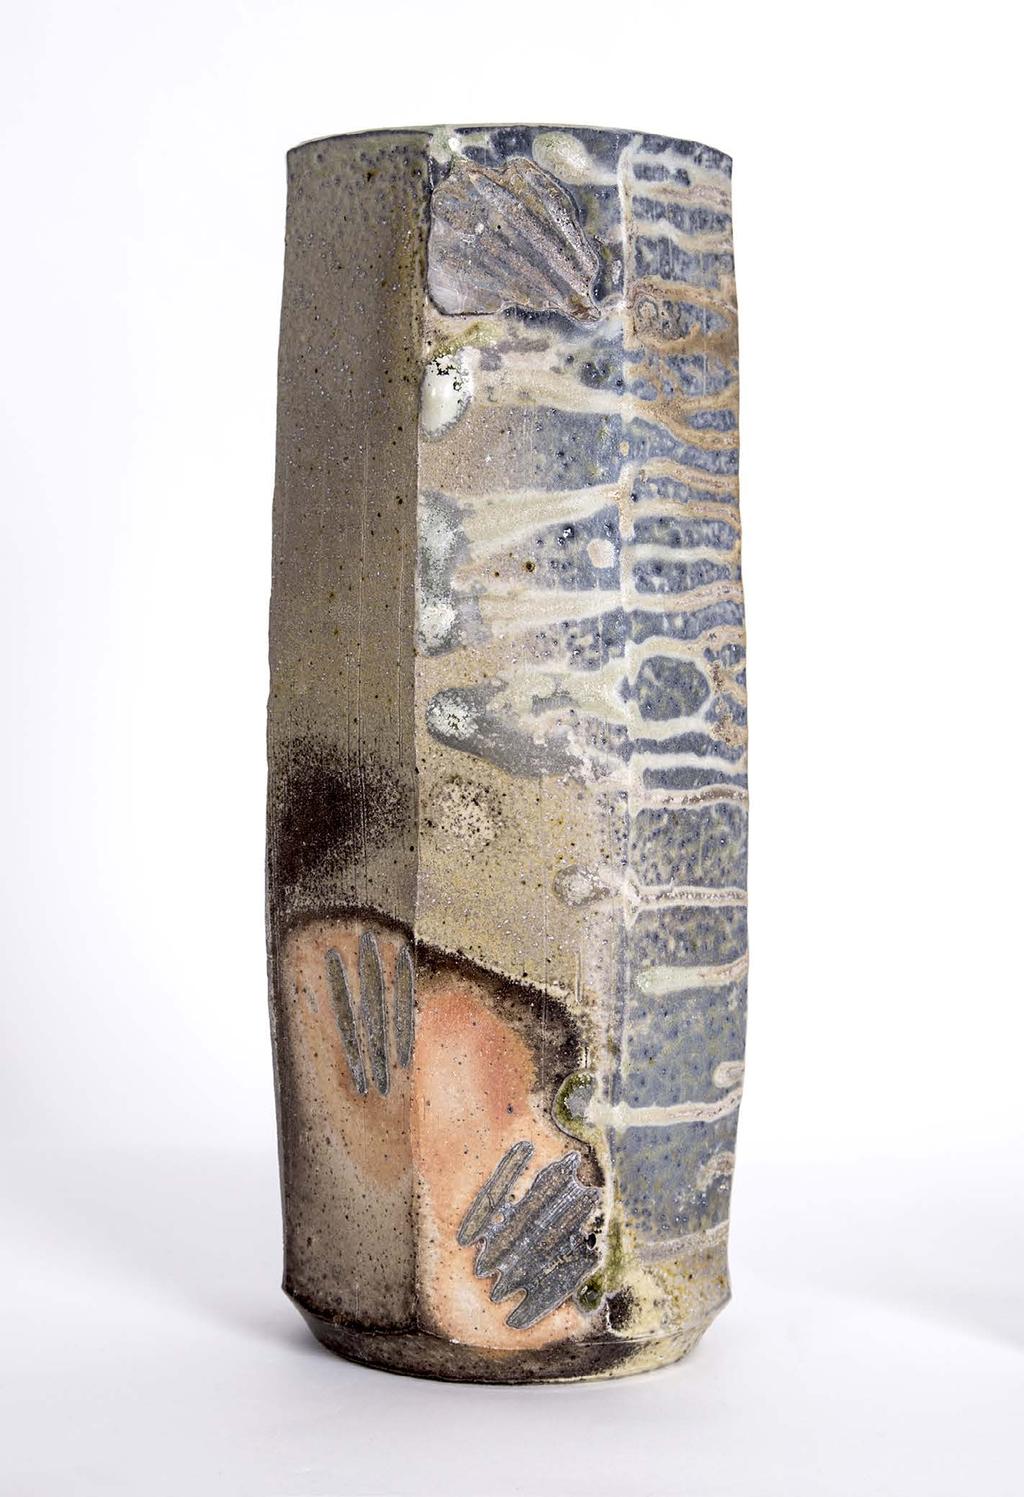 Stewart Scambler, Column, 2013, woodfired stoneware, 37 x 14 cm, The University of